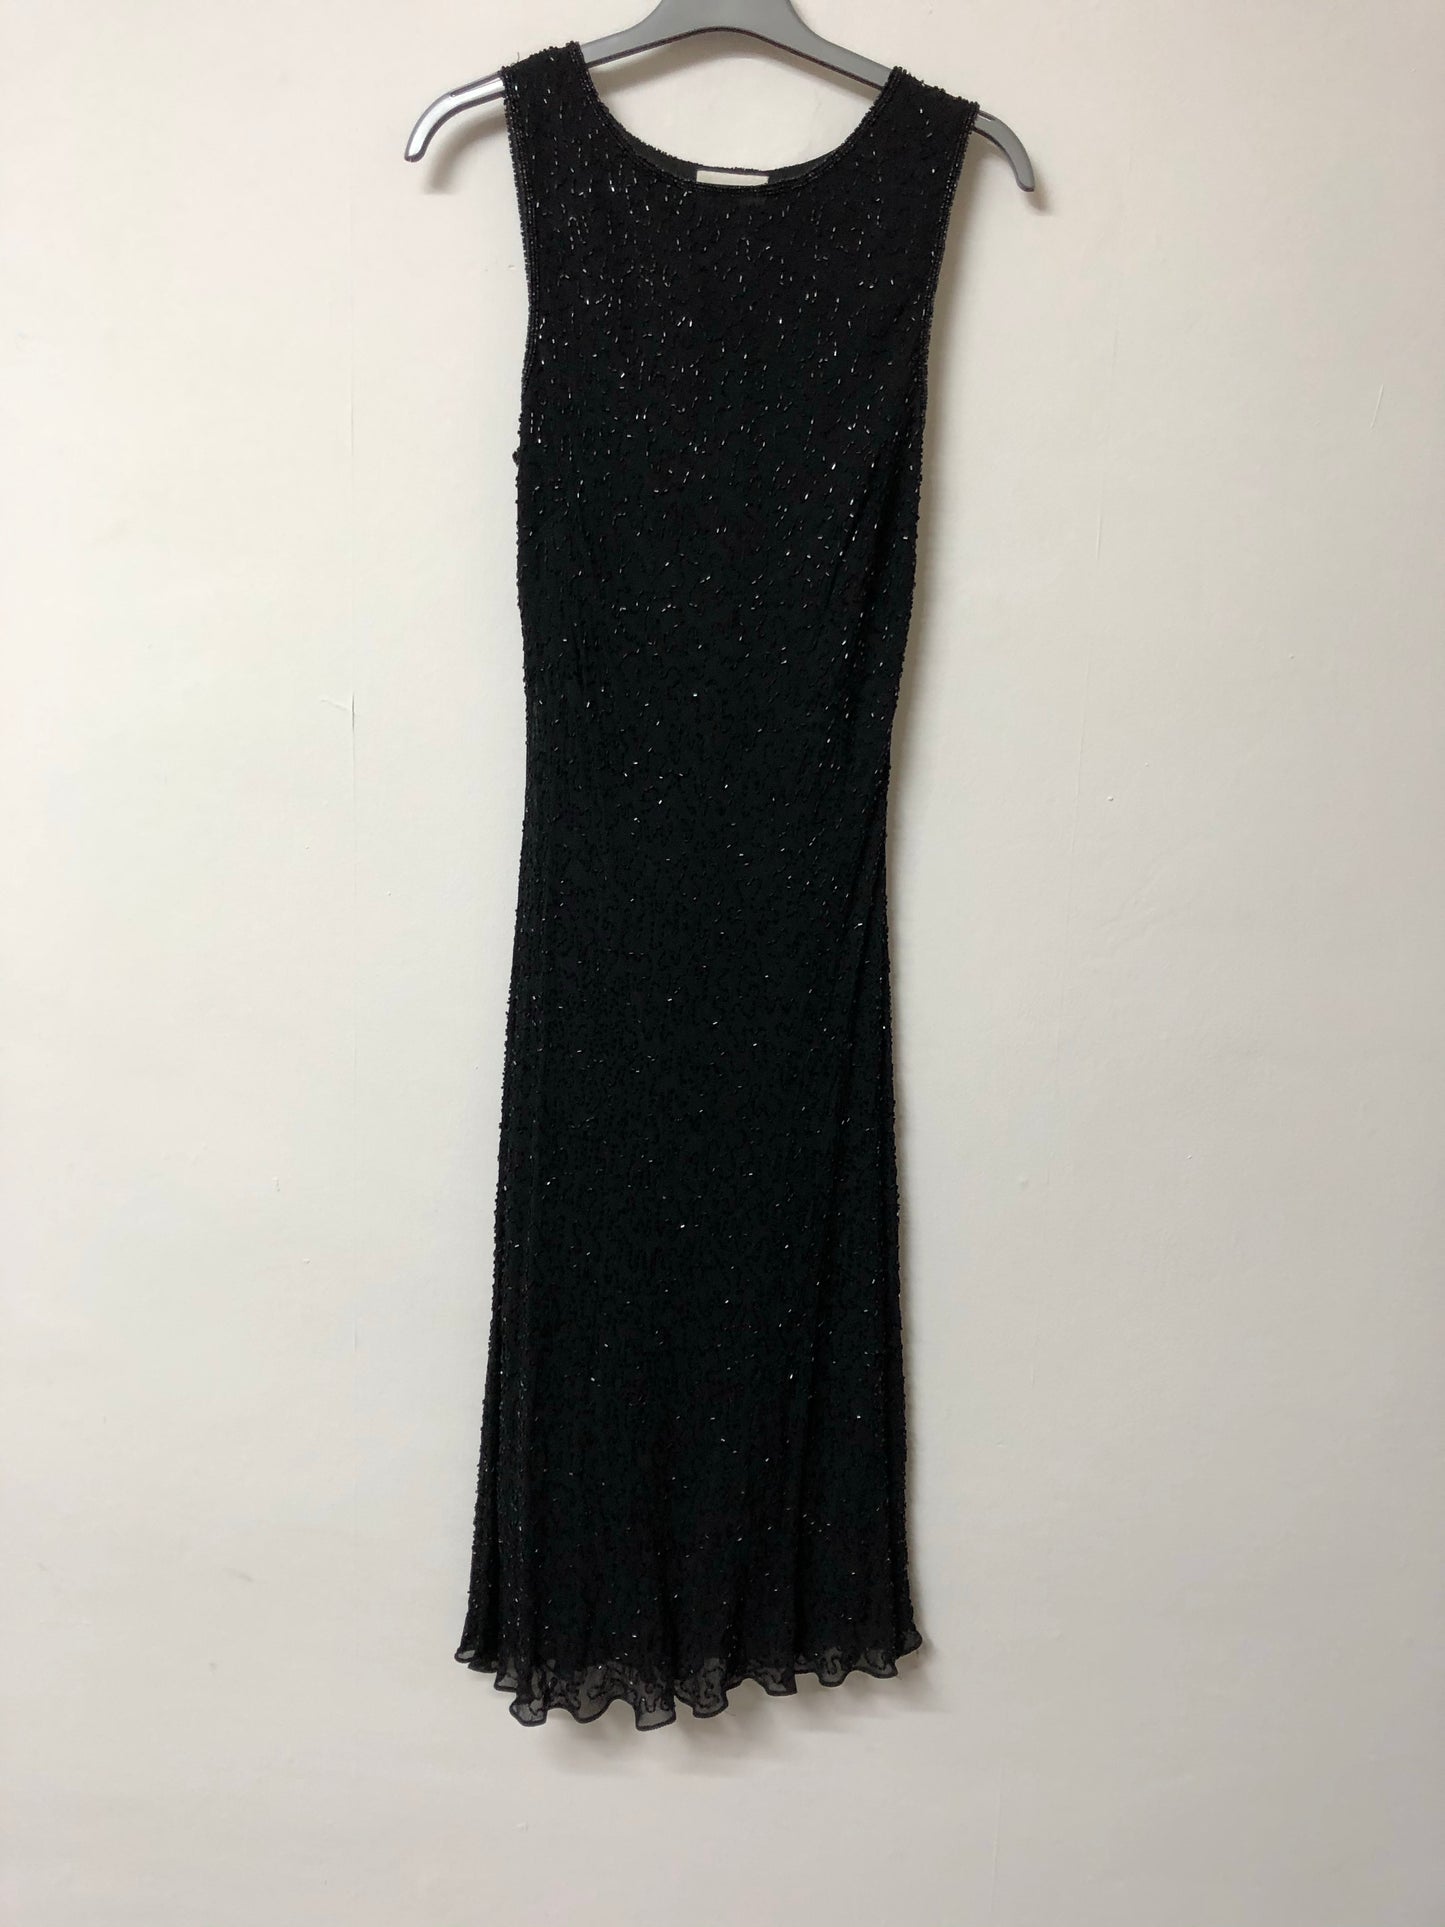 Wallis Petite Black Beaded Dress Size 14